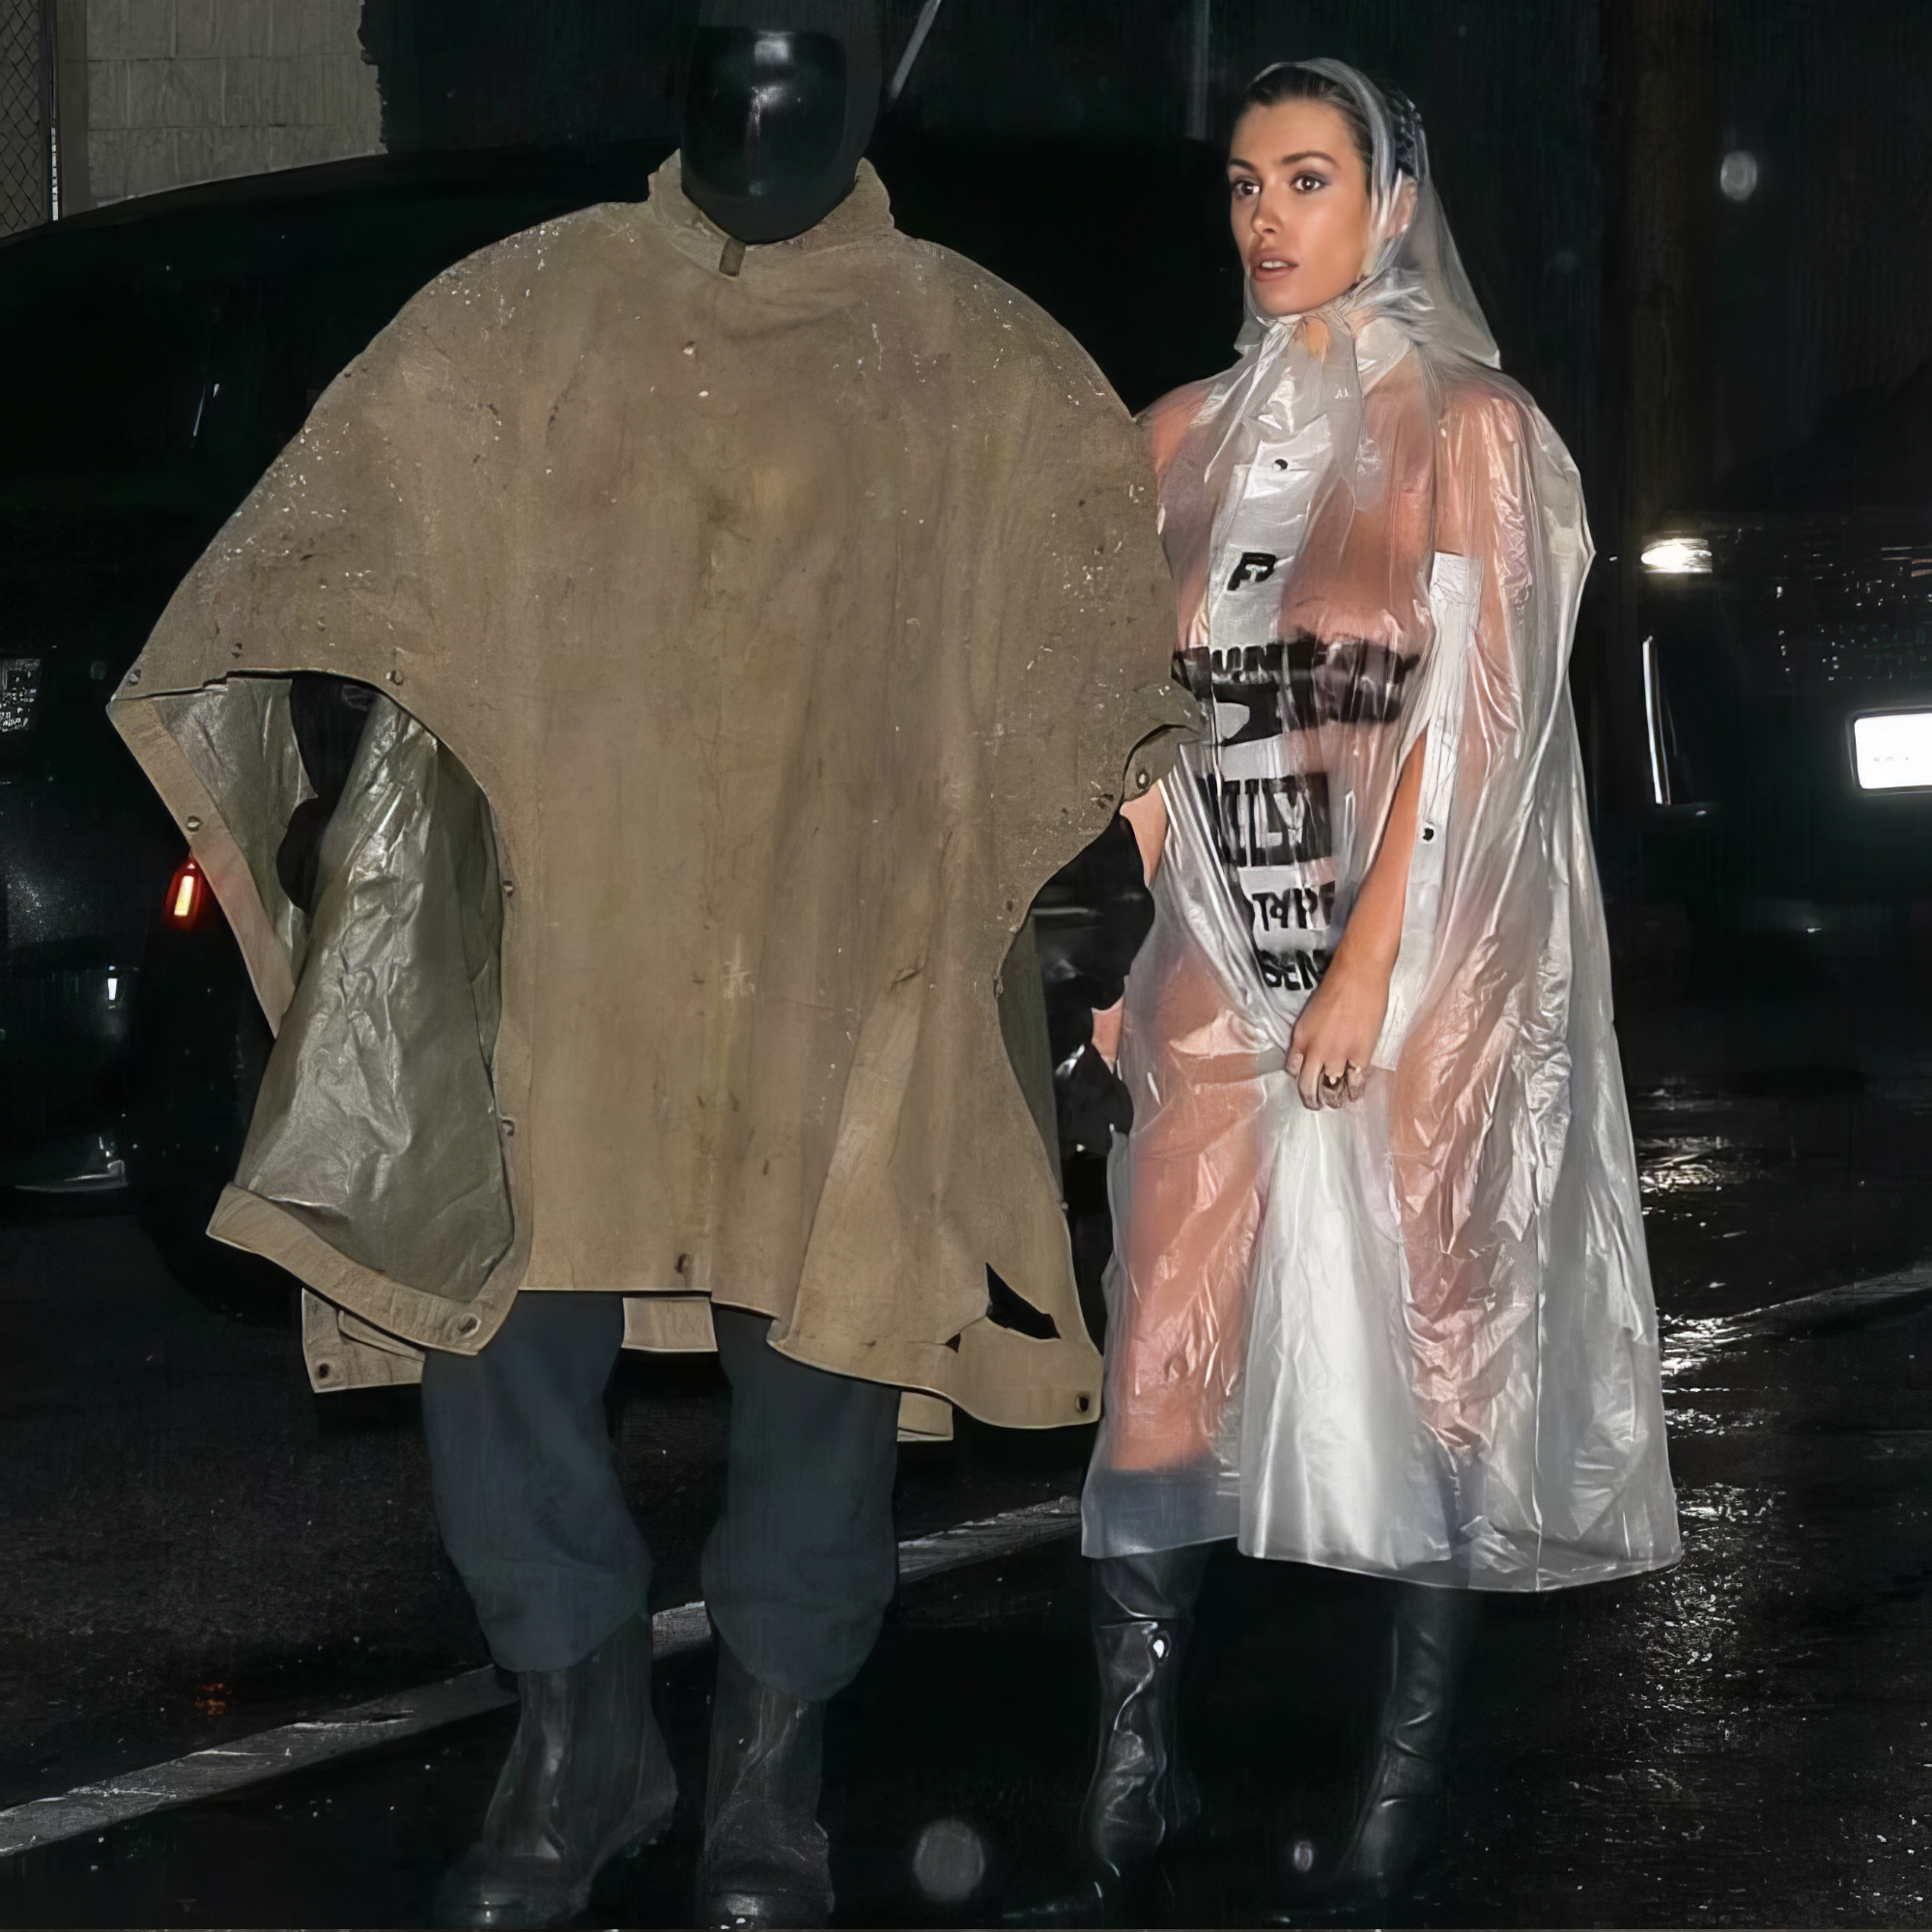 Kanye West and Bianca Sensori at night